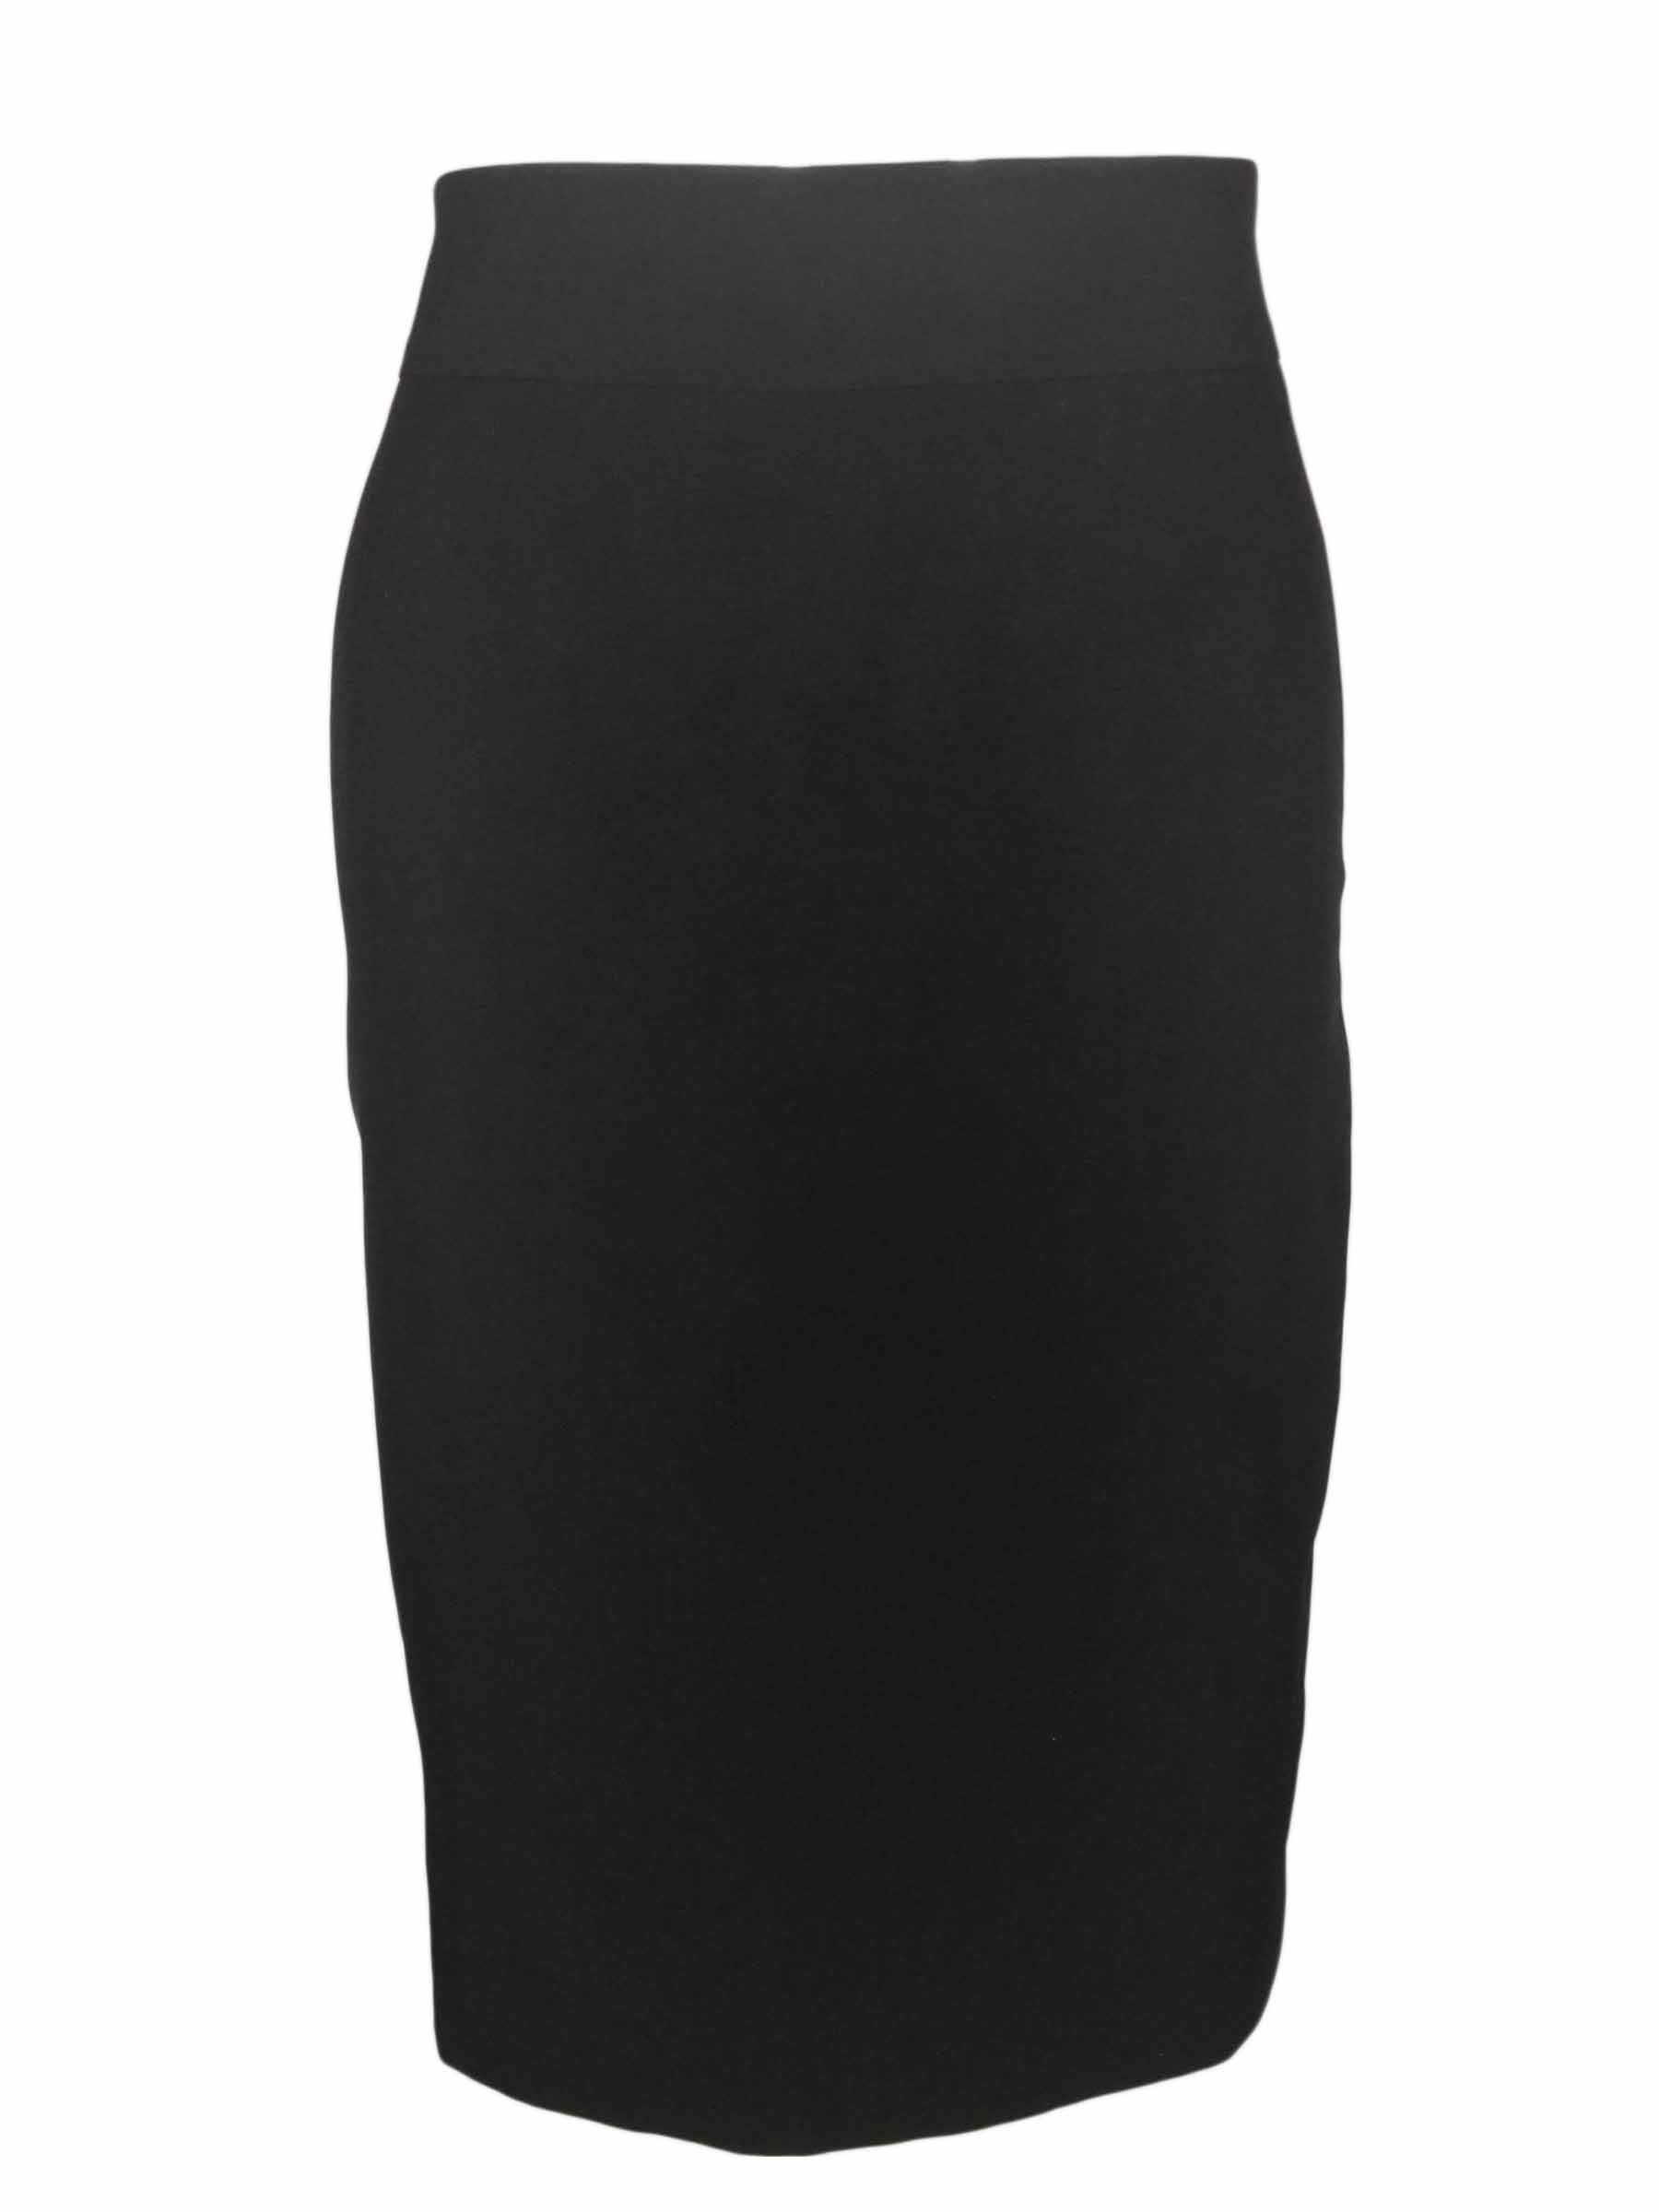 Straight Custom Skirt Black Wool Blend Uniform Edit